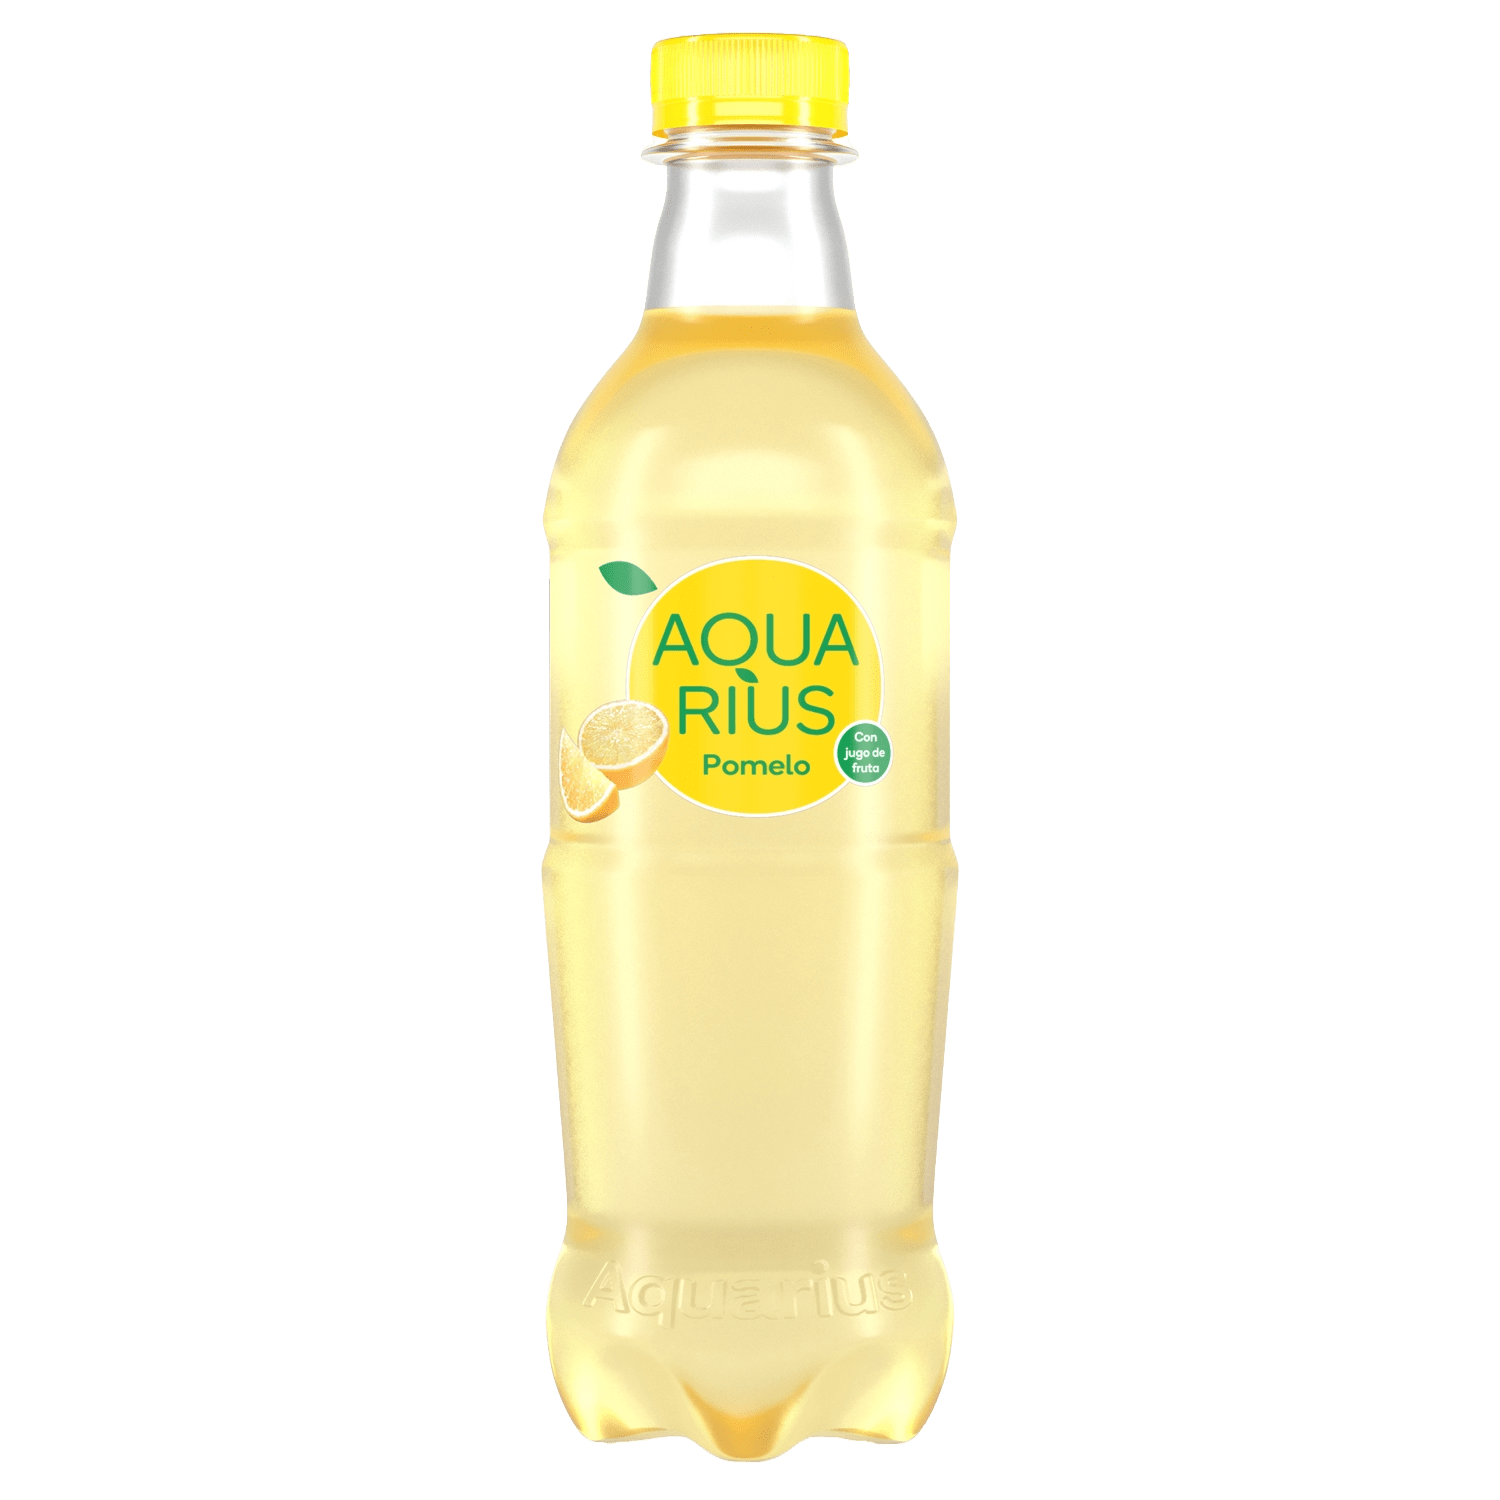 Botella de Aquarius Pomelo